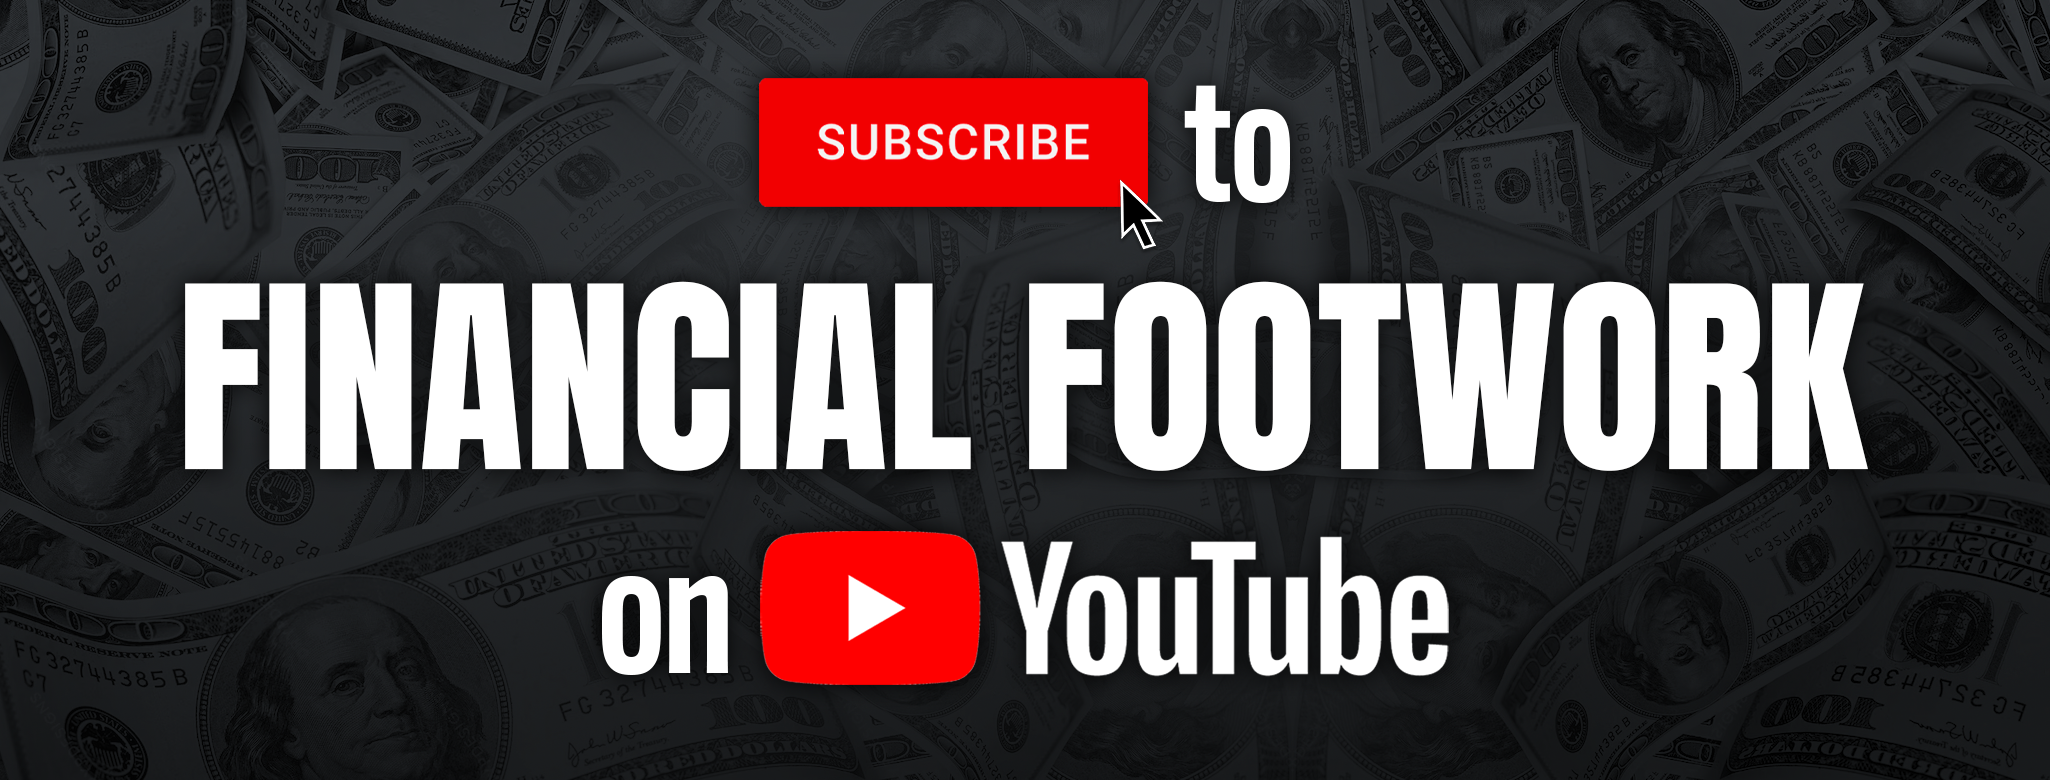 Financial Footwork YouTube